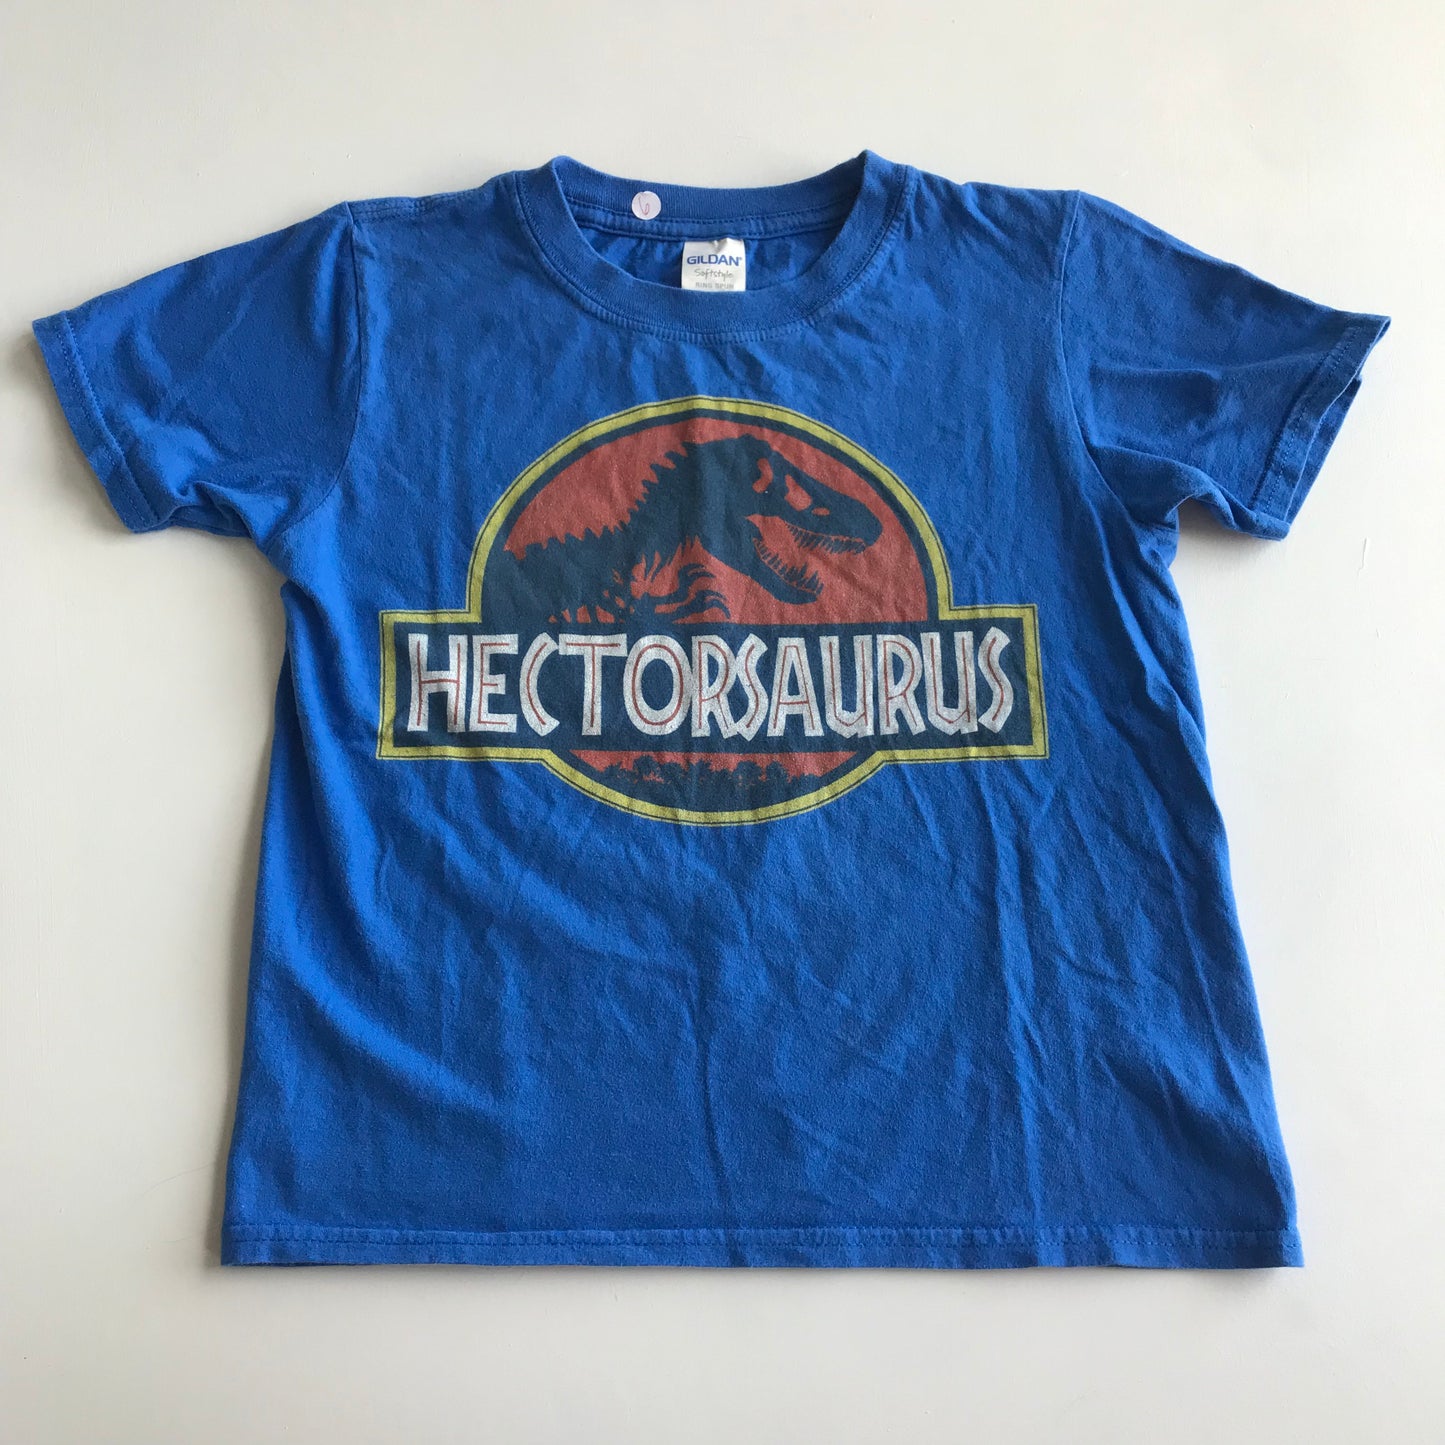 Hectorsaurus Jurassic Park T-shirt Age 6